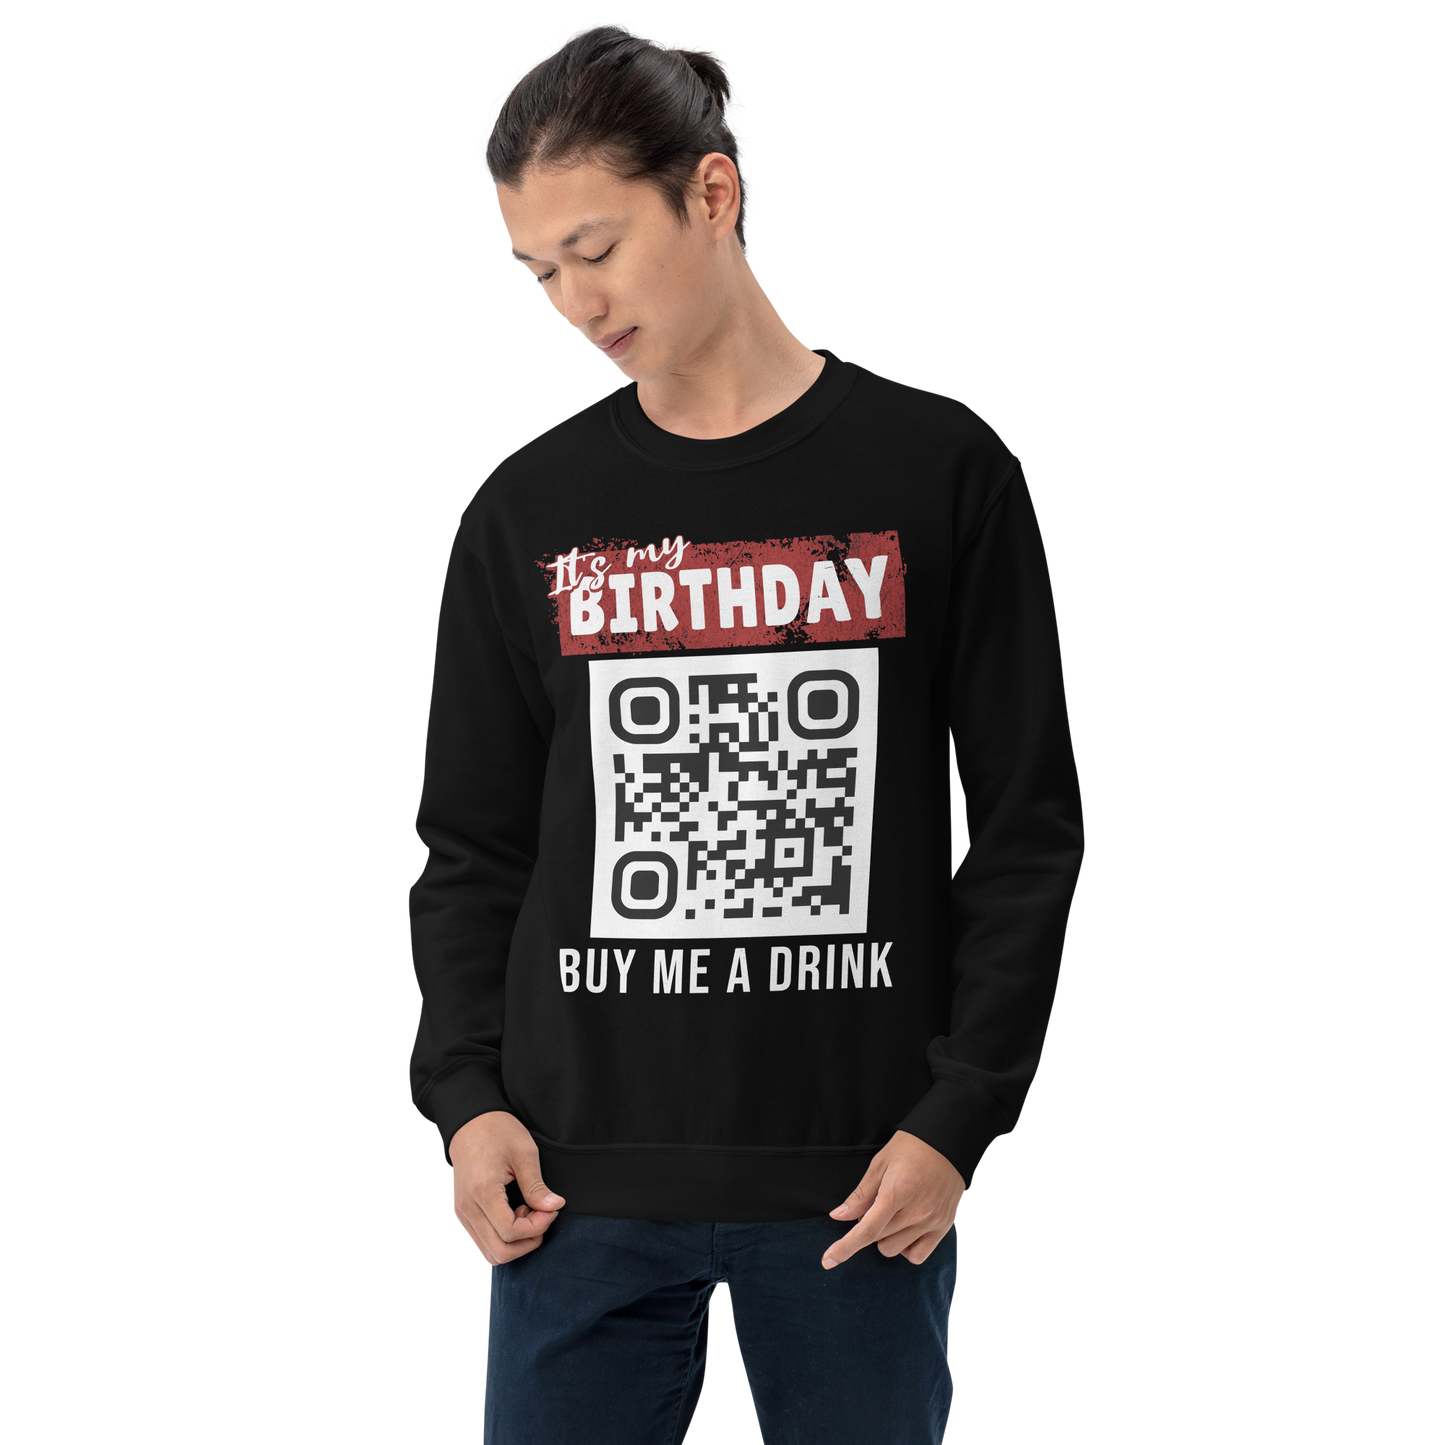 It's My Birthday Buy Me A Drink Sweatshirt - Personalizable